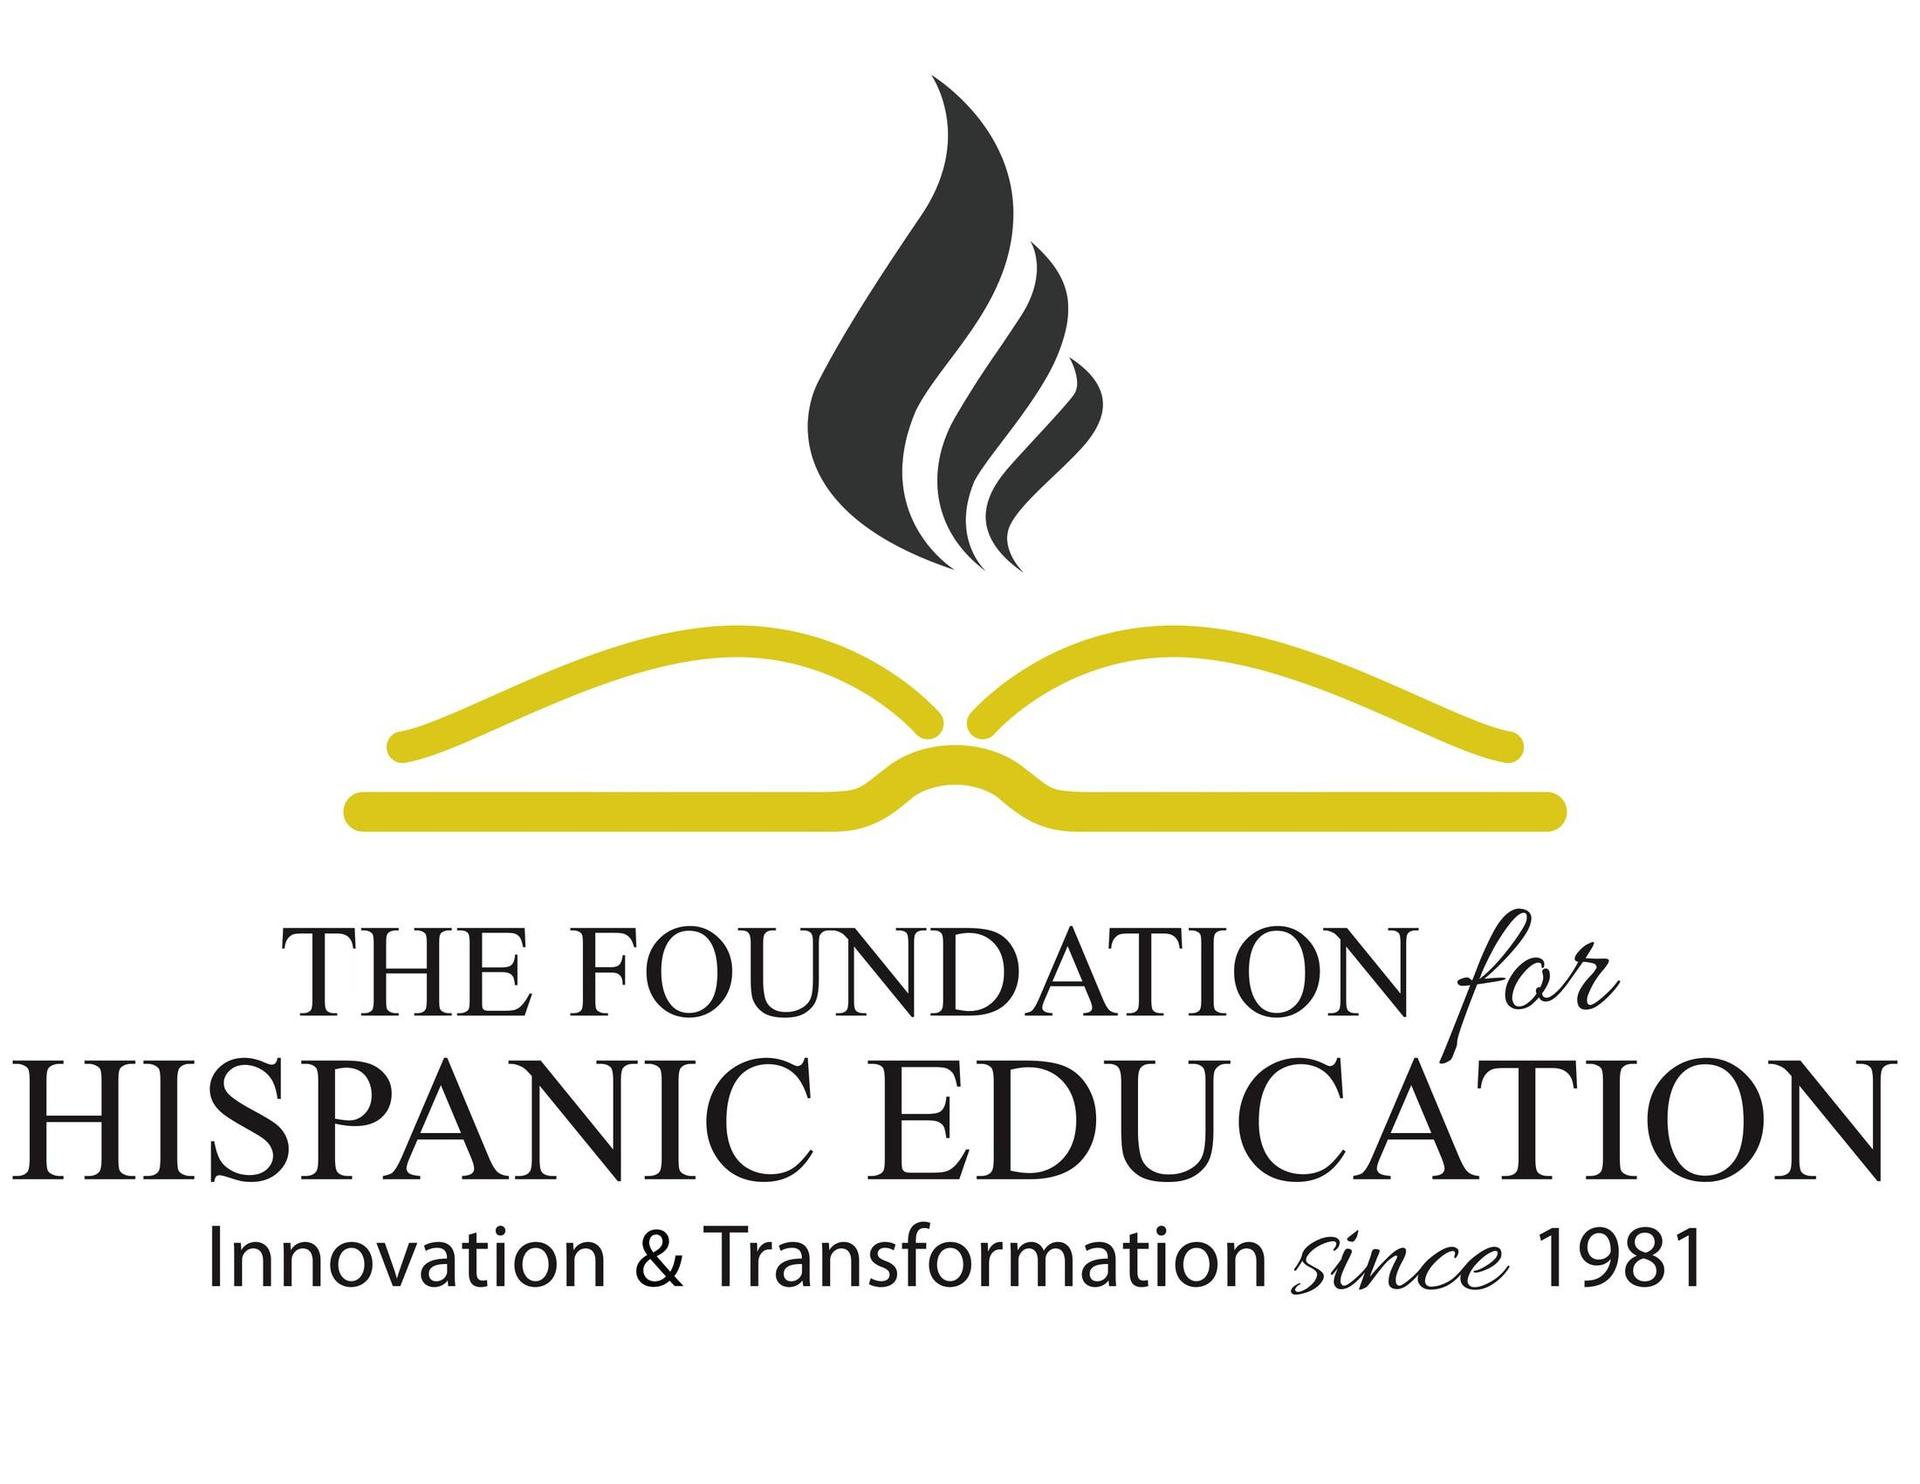 The Foundation for Hispanic Education